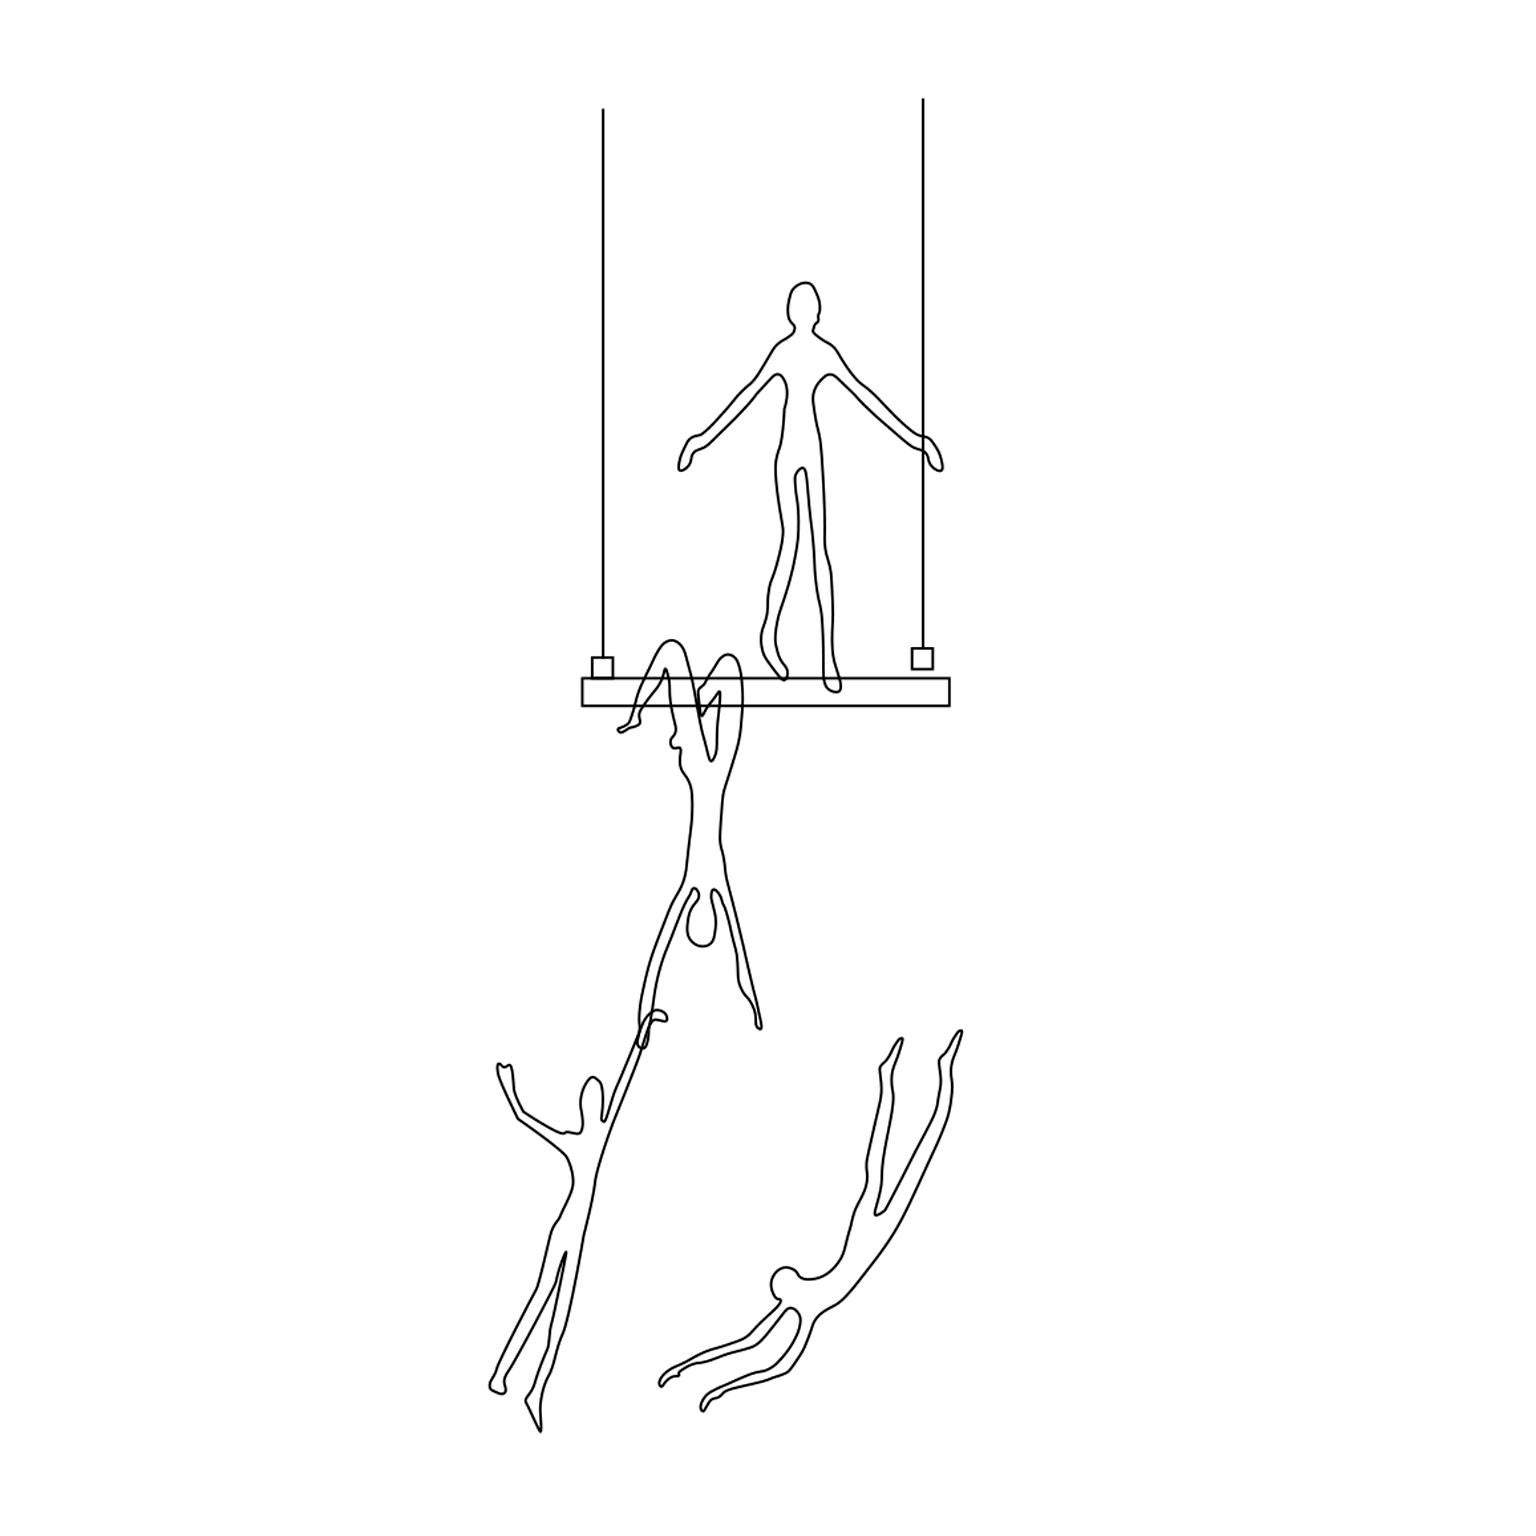 ACROBATS. Human Figurative Stainless Steal Hanging Sculptures. Modern Art - Gray Still-Life Sculpture by Arozarena De La Fuente